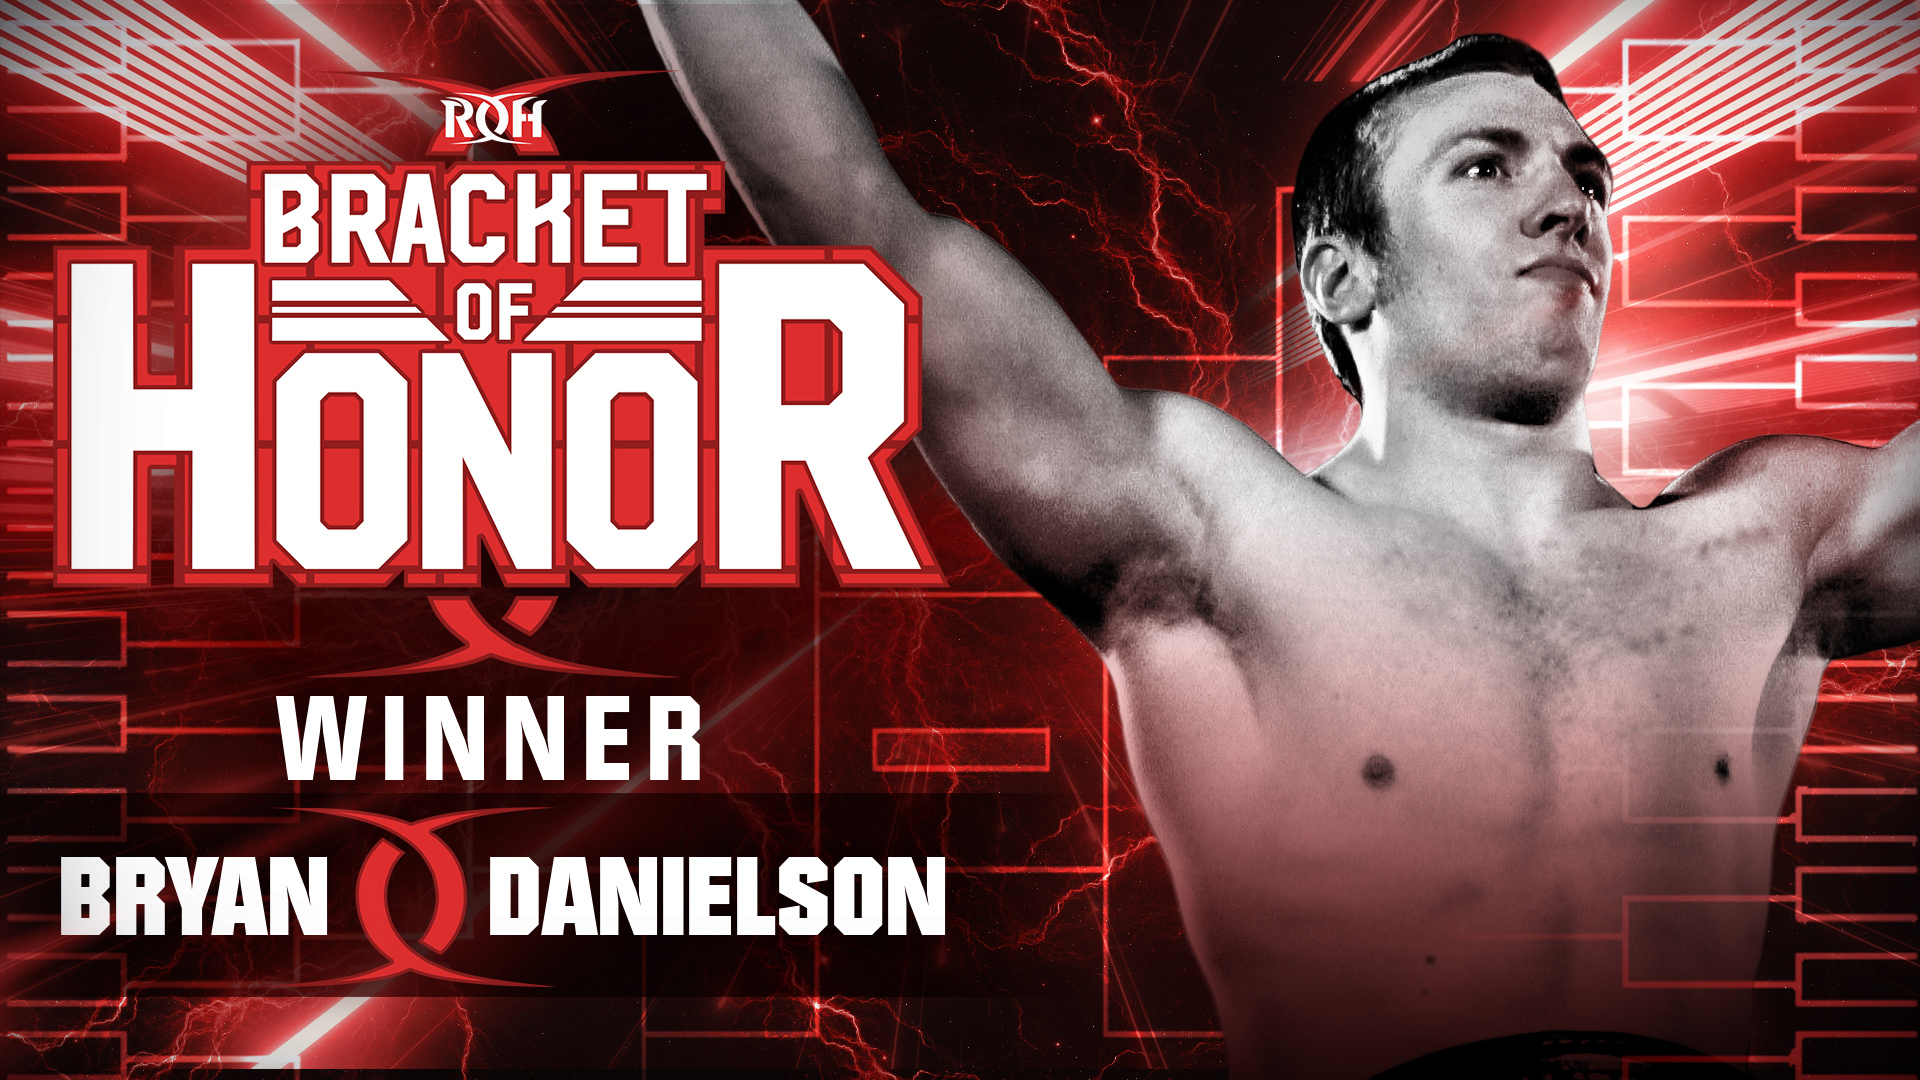 Bryan Danielson Wins the Bracket of Honor Championship